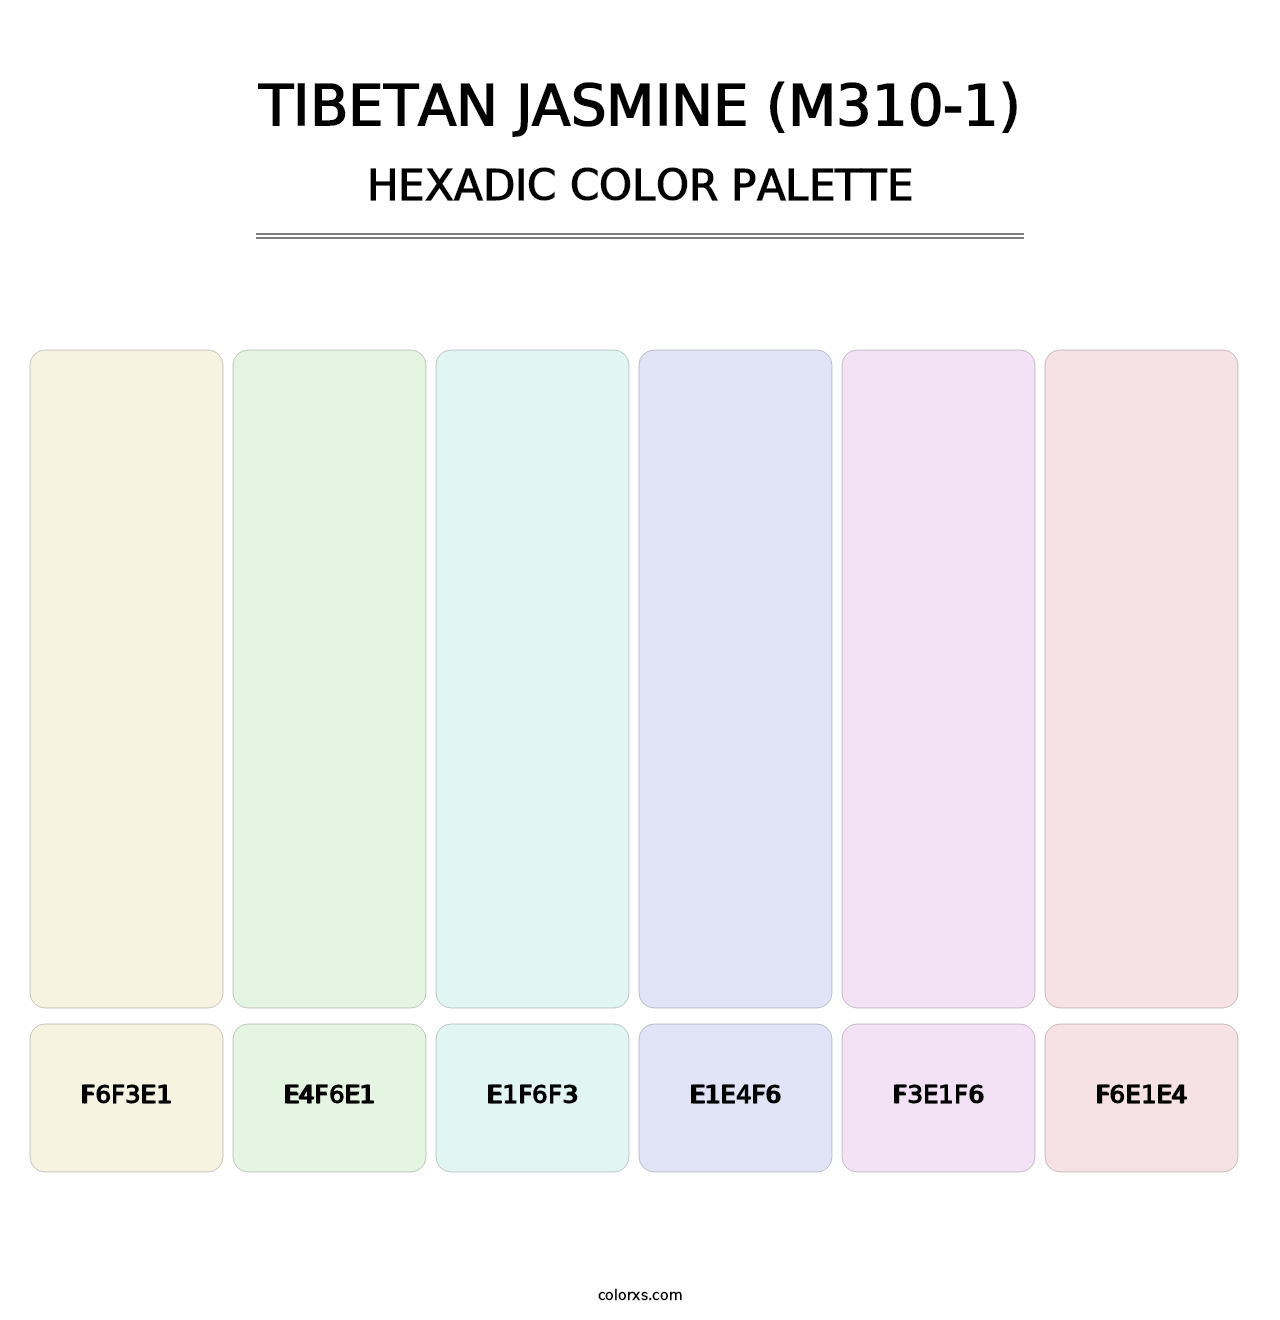 Tibetan Jasmine (M310-1) - Hexadic Color Palette